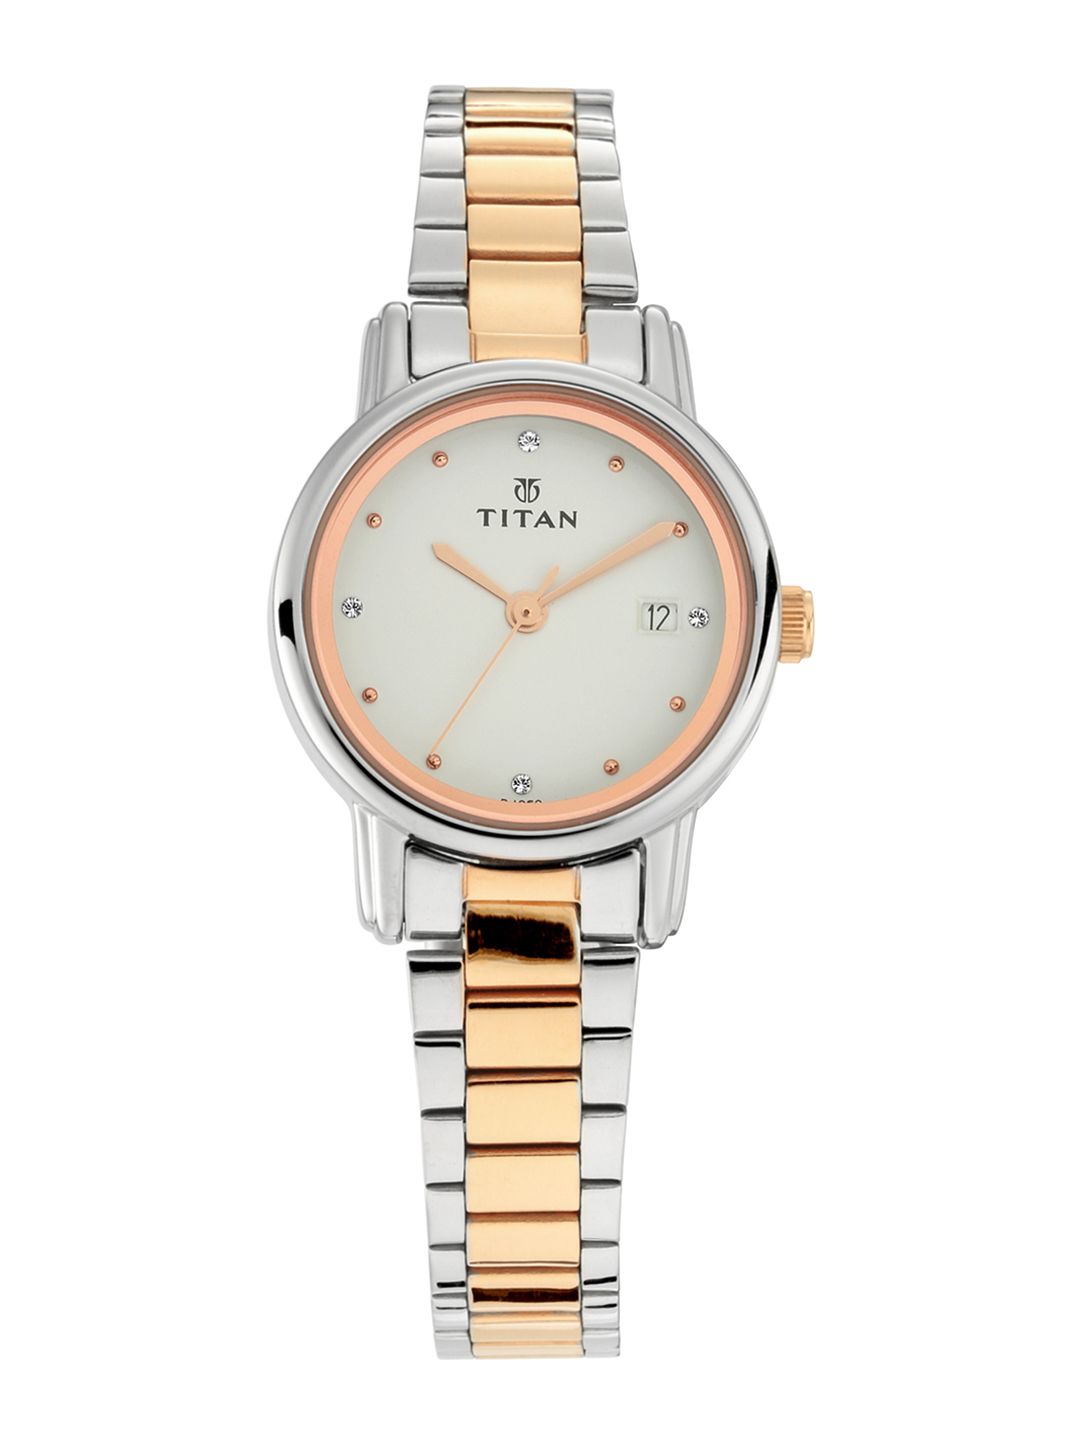 Titan Titan Dress Women White Analogue watch 2572KM01 Price in India